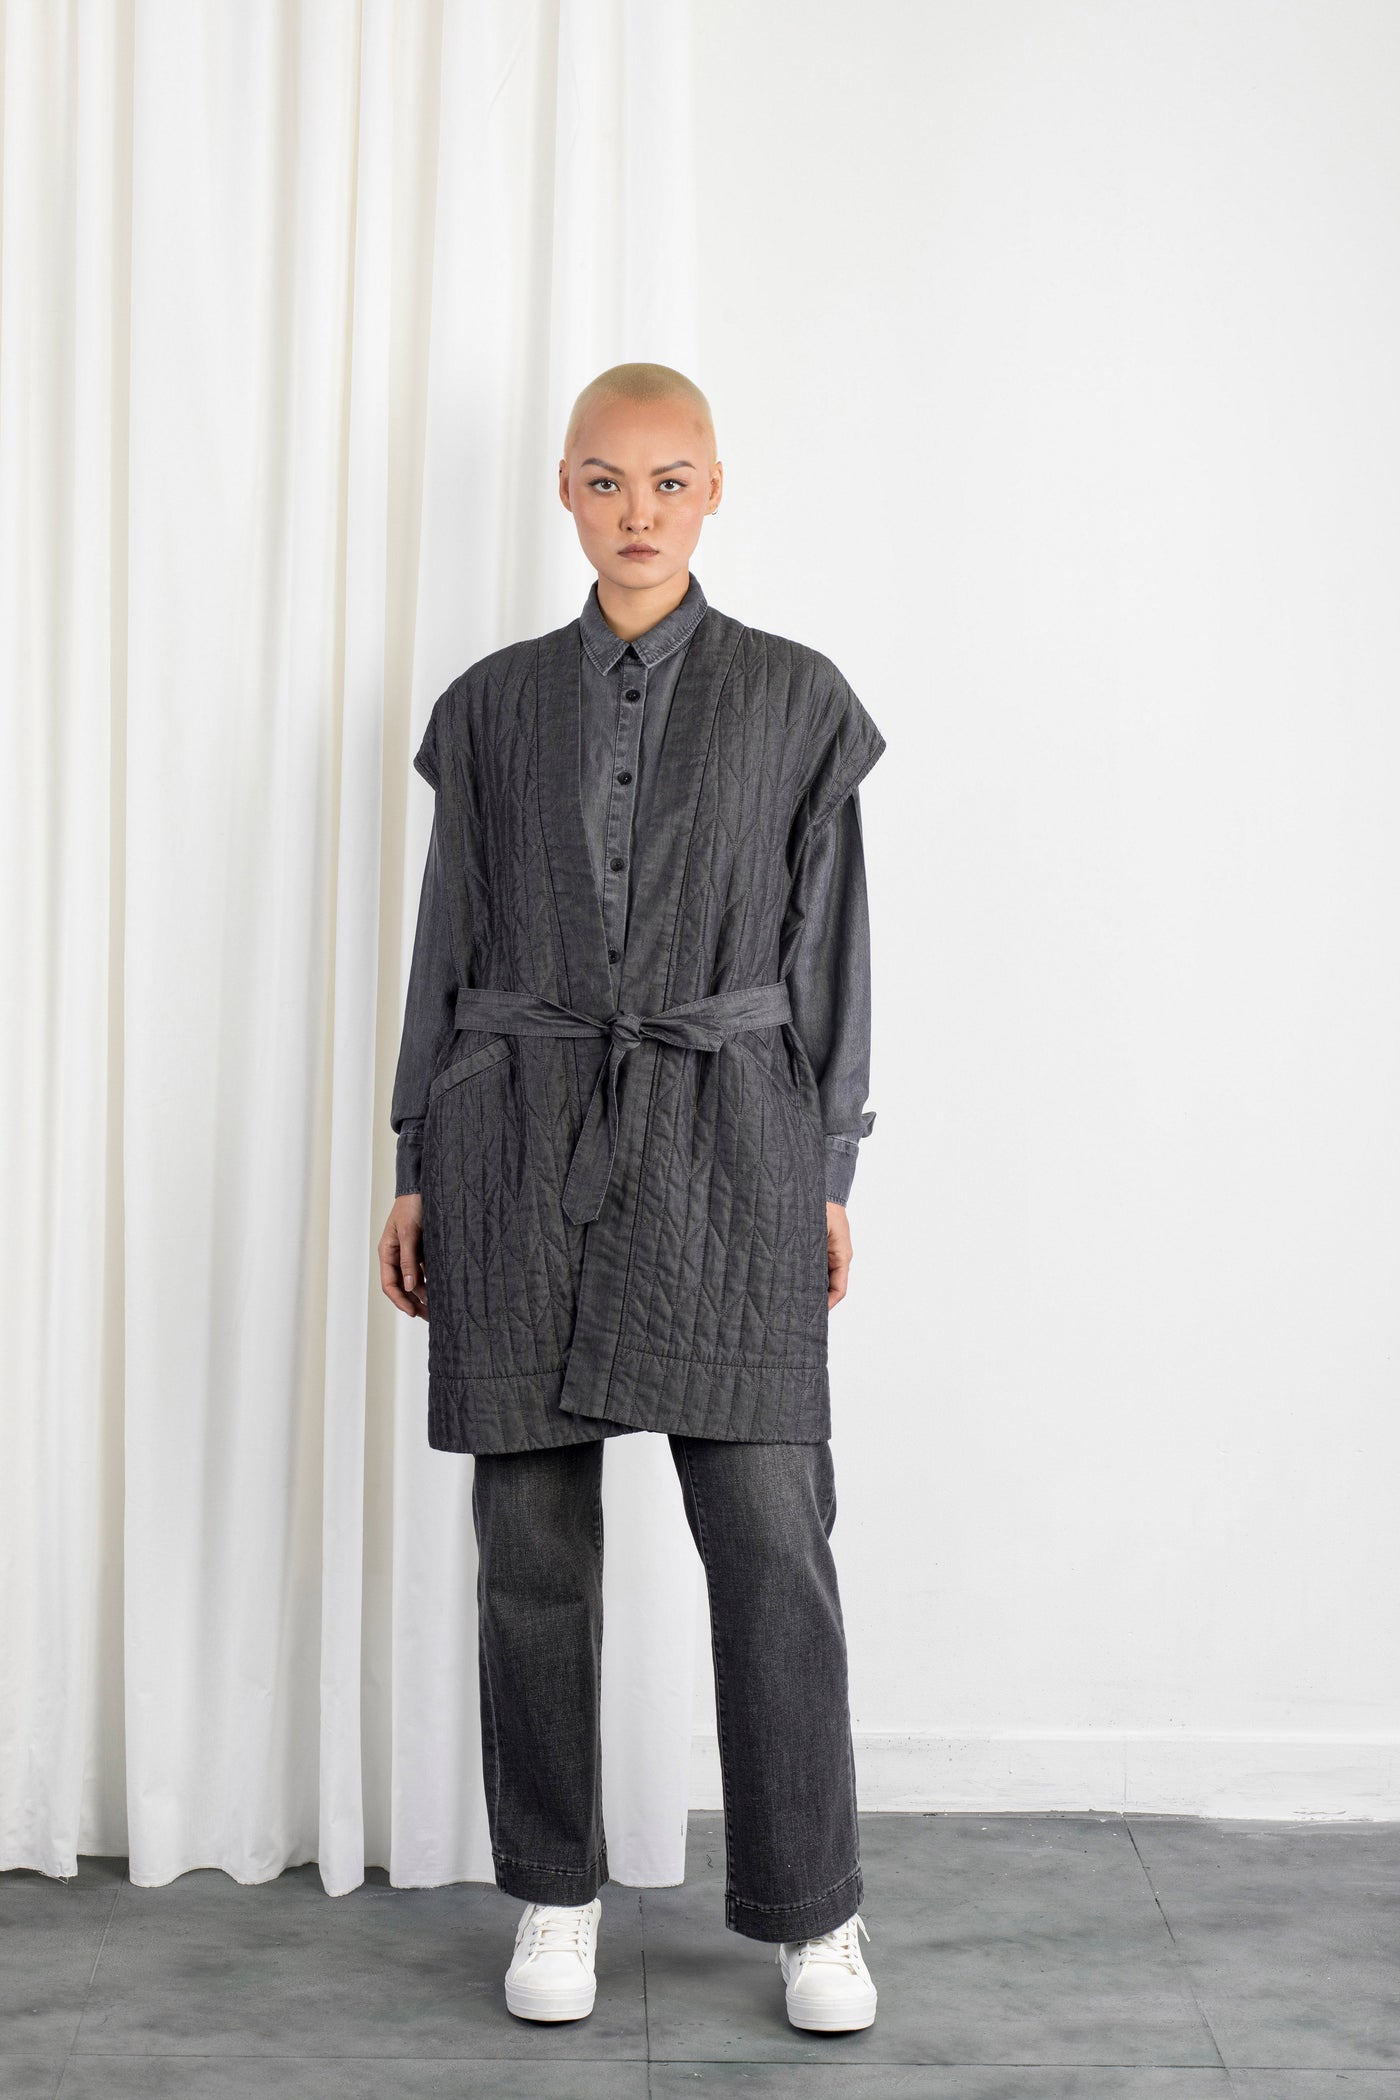 BIRDSONG - Kimono Vest, Tencel Quilted Kimono, Grey